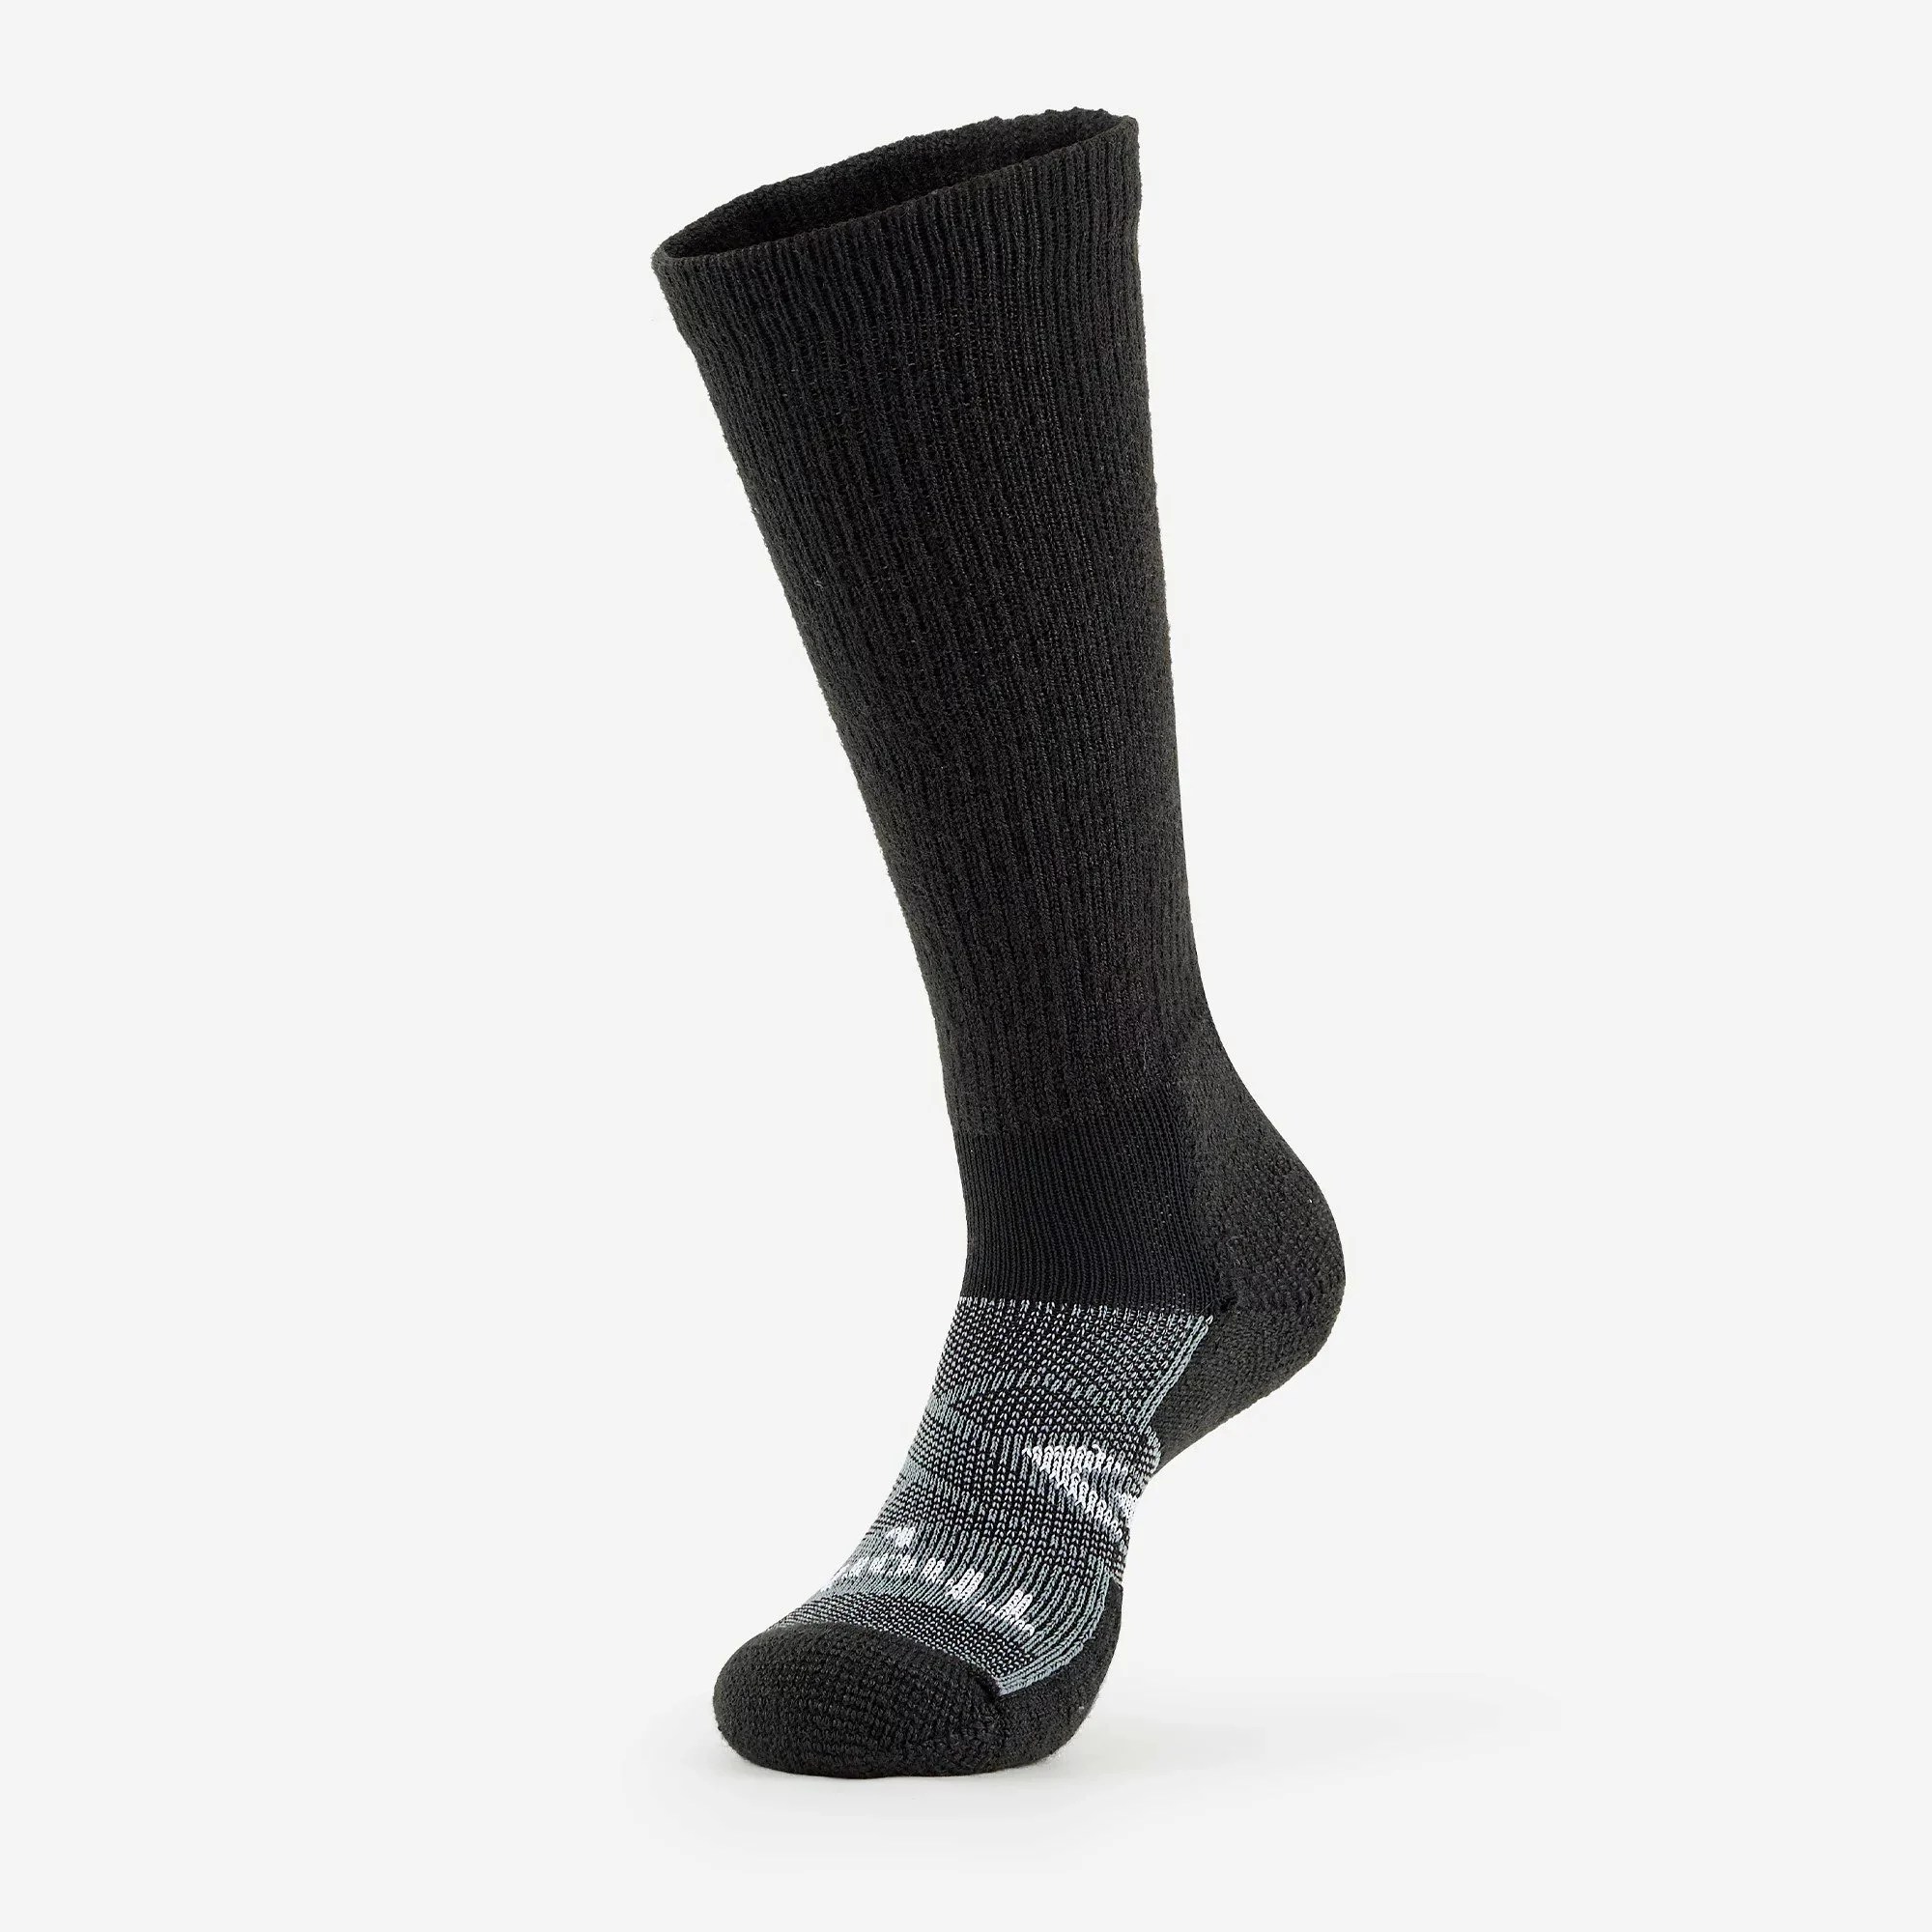 thorlos socks, best compression socks for travel